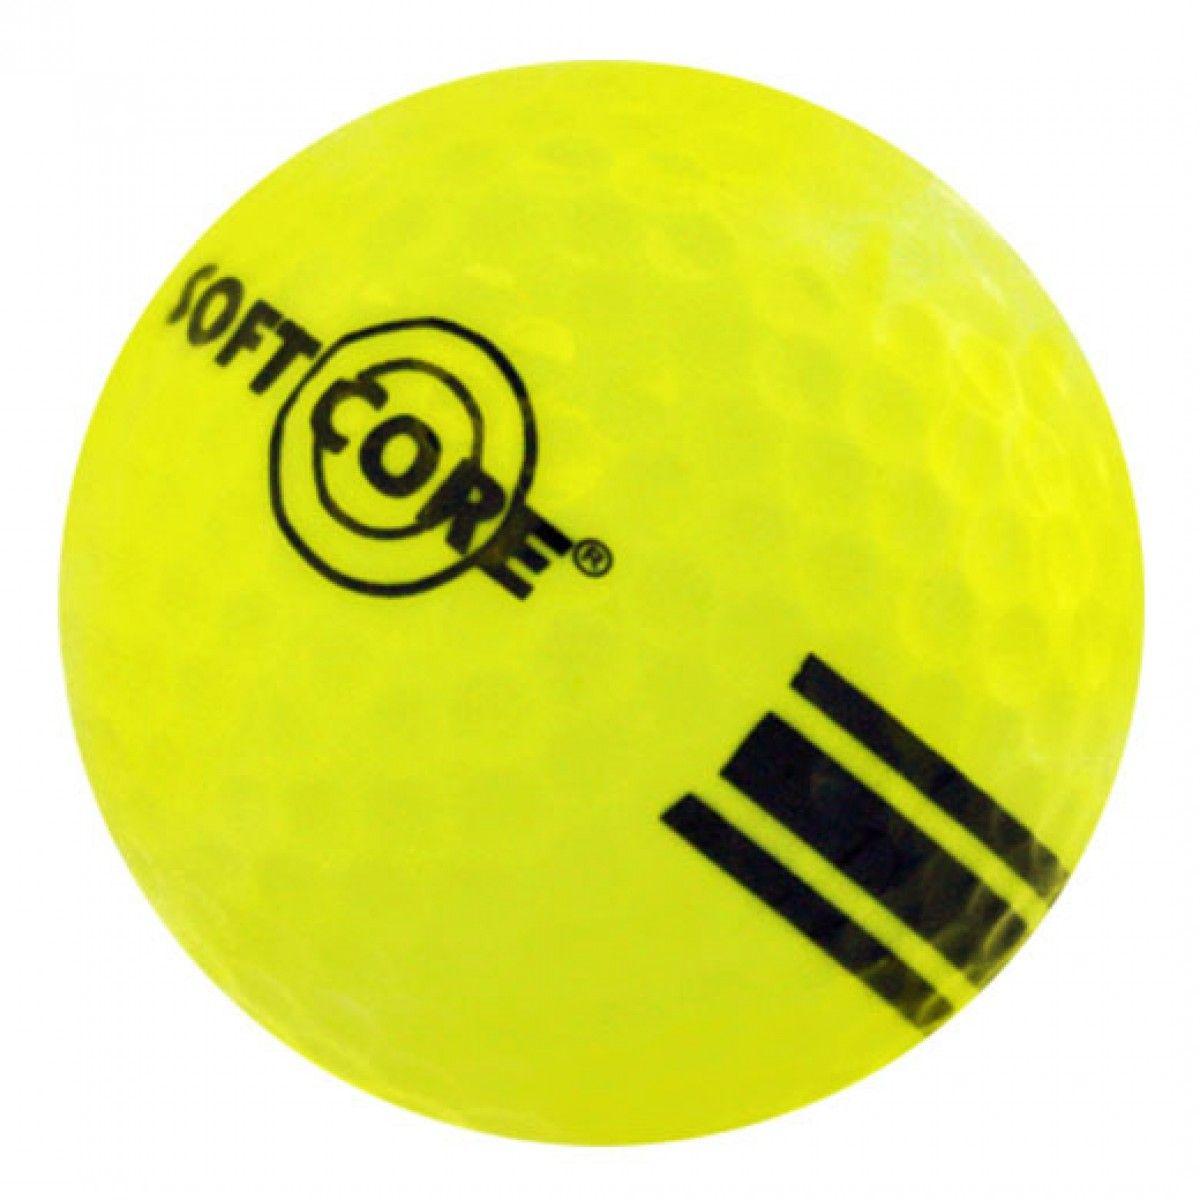 Yellow and Black Ball Logo - New Range Ball Yellow Black SoftCore